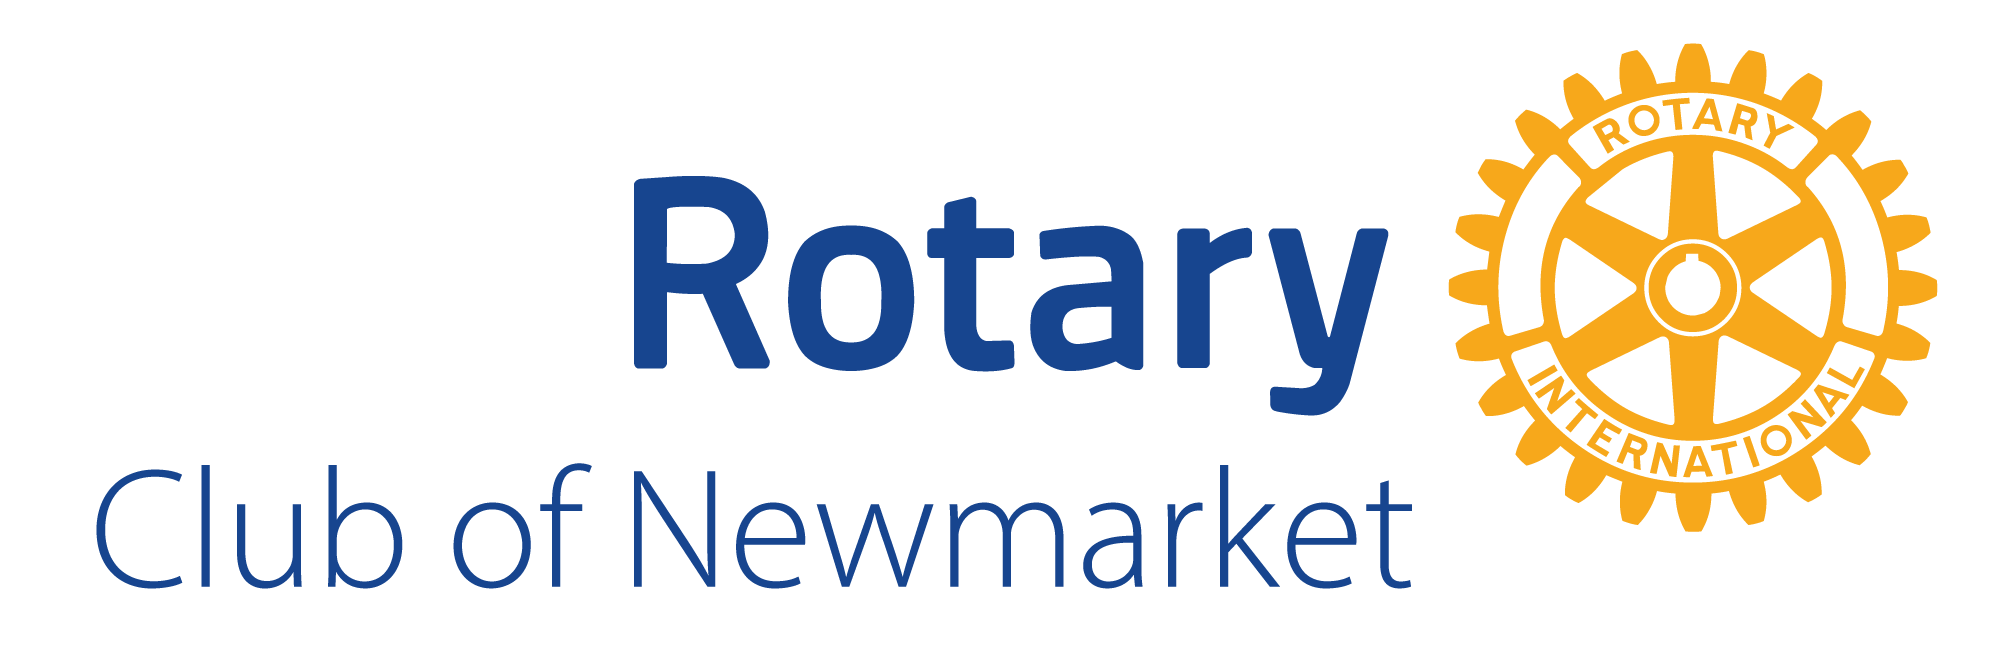 Rotary Club of Waterloo logo